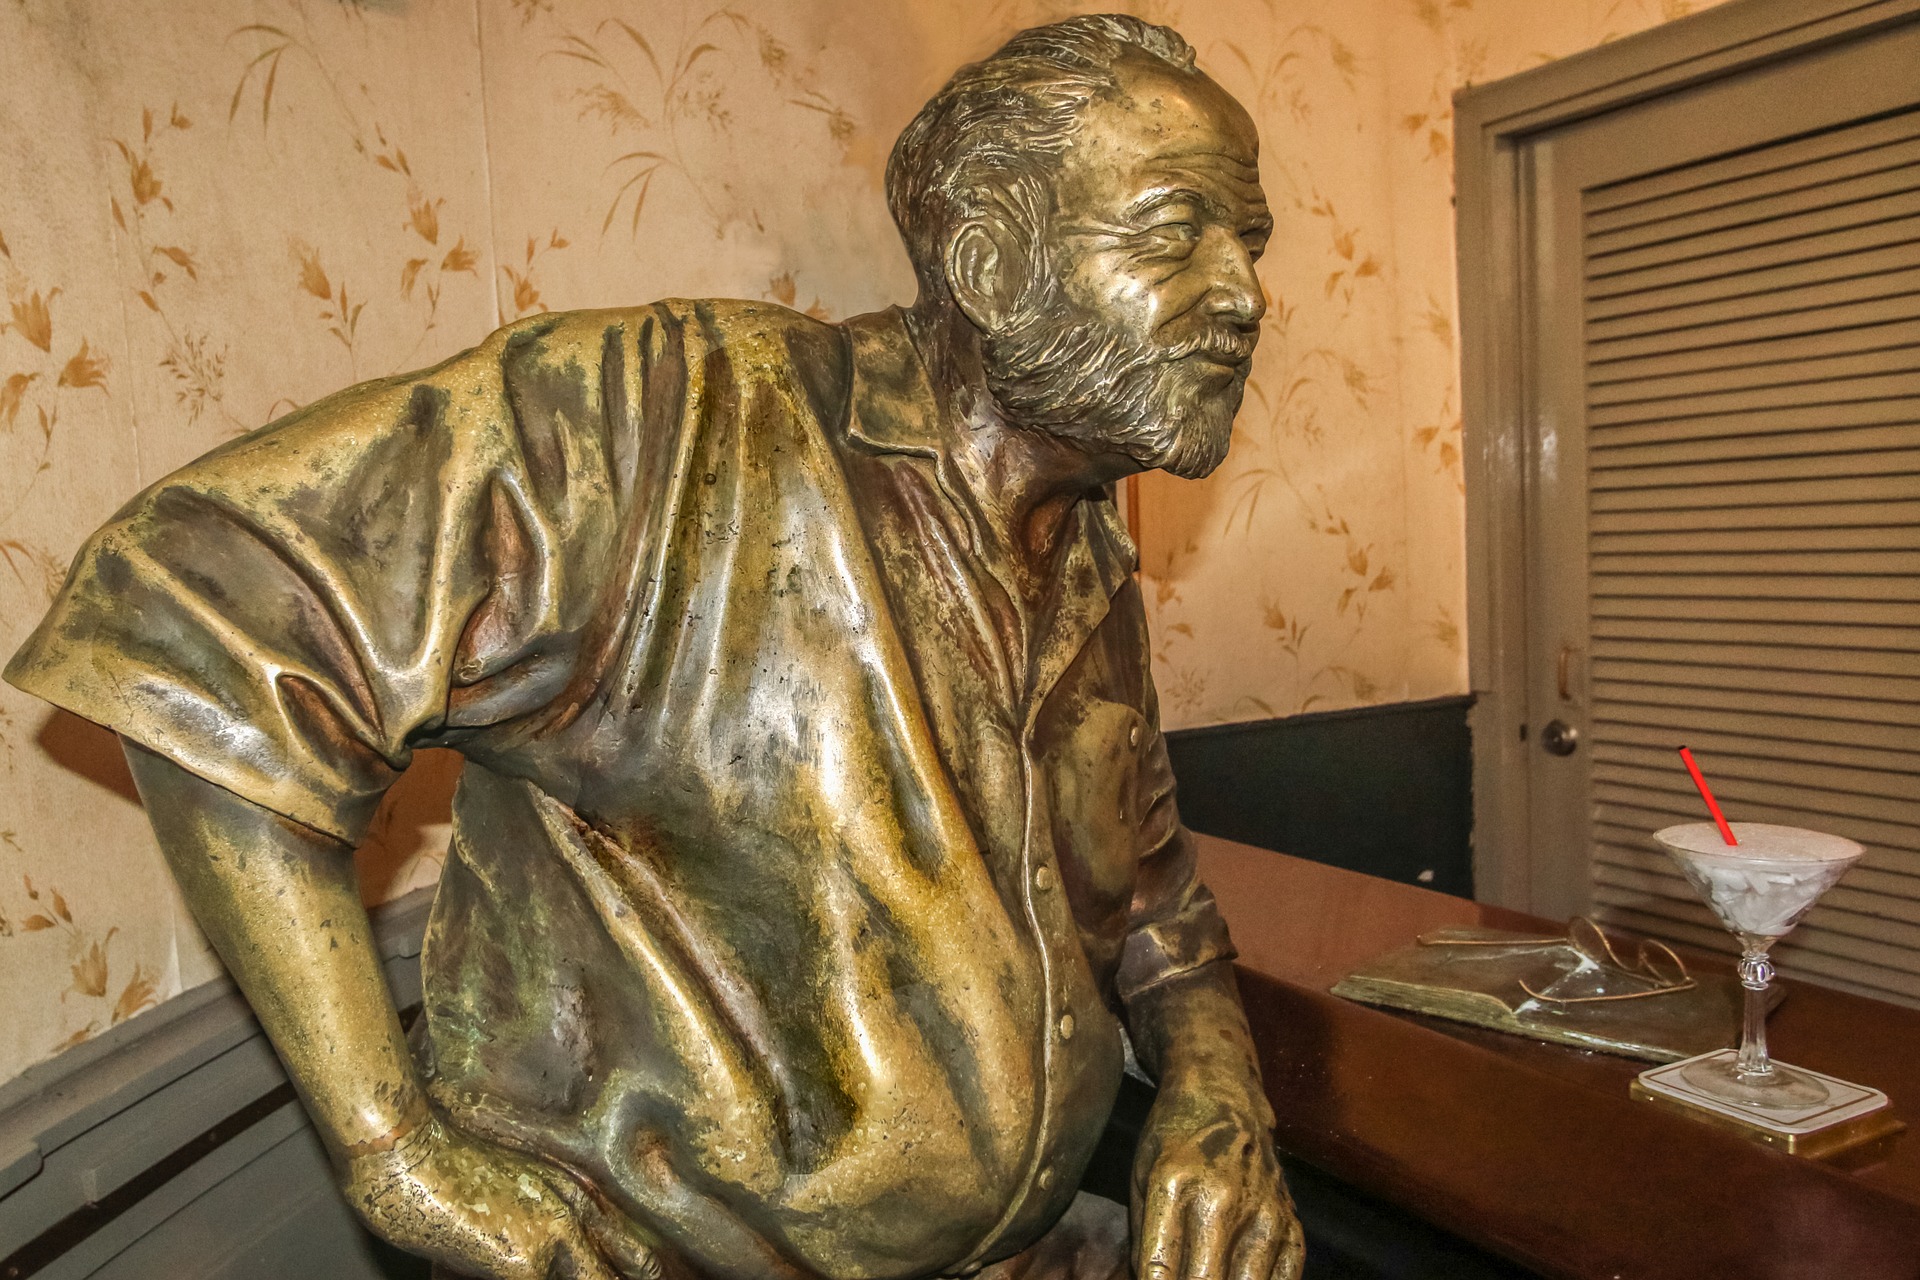 A bronze statue of Hemingway sitting in a bar